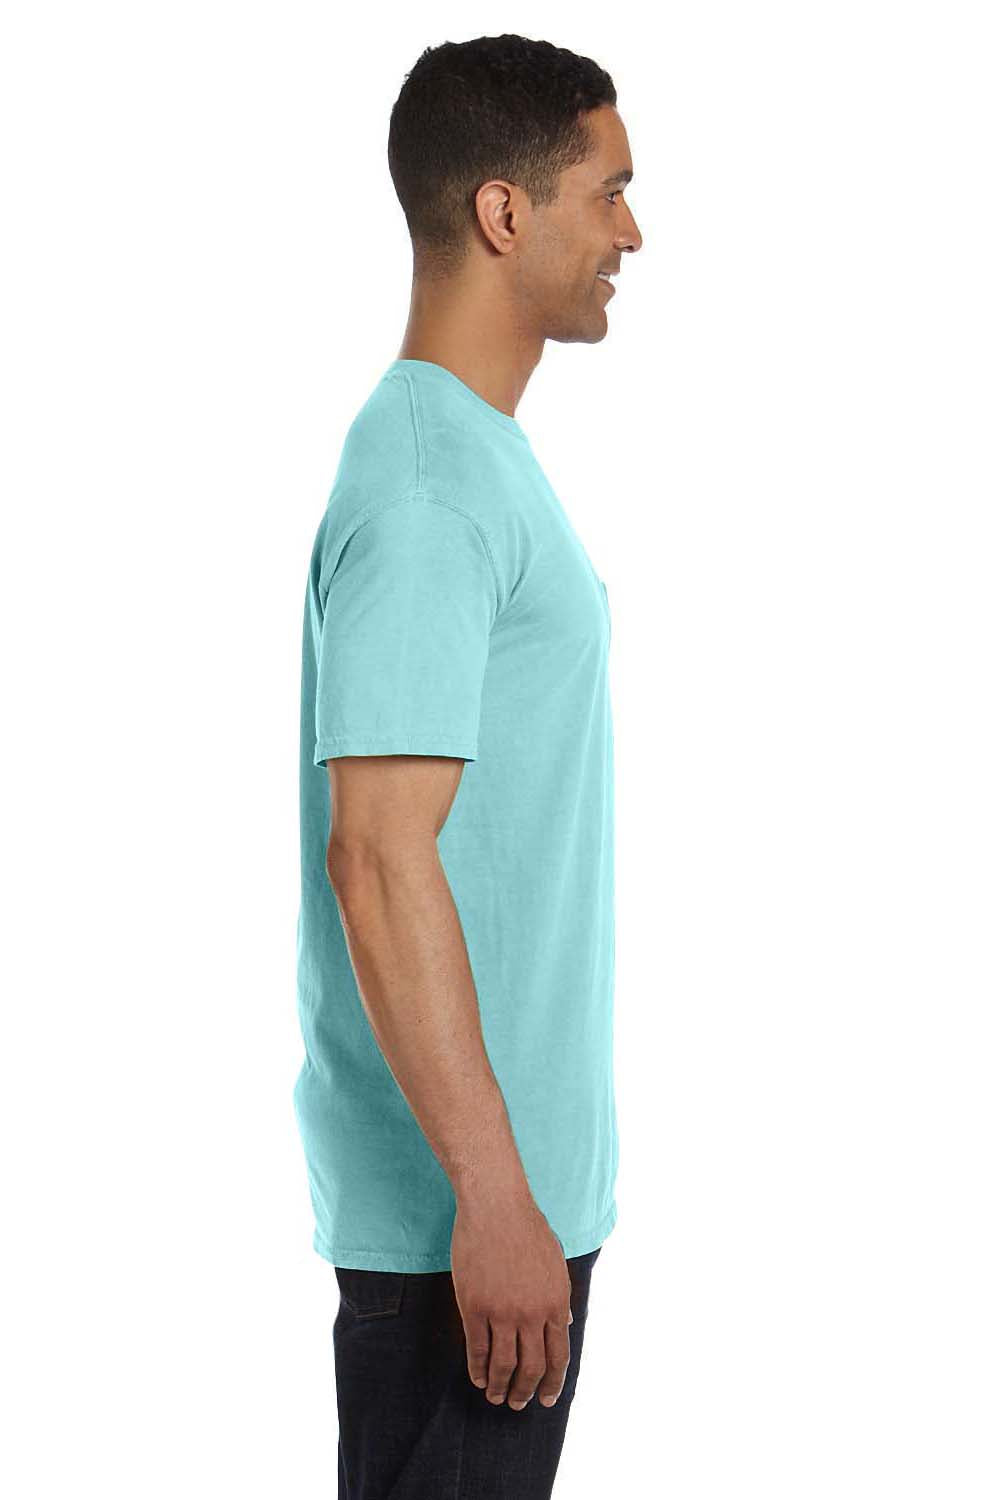 Comfort Colors 6030CC Mens Short Sleeve Crewneck T-Shirt w/ Pocket Chalky Mint Blue Side